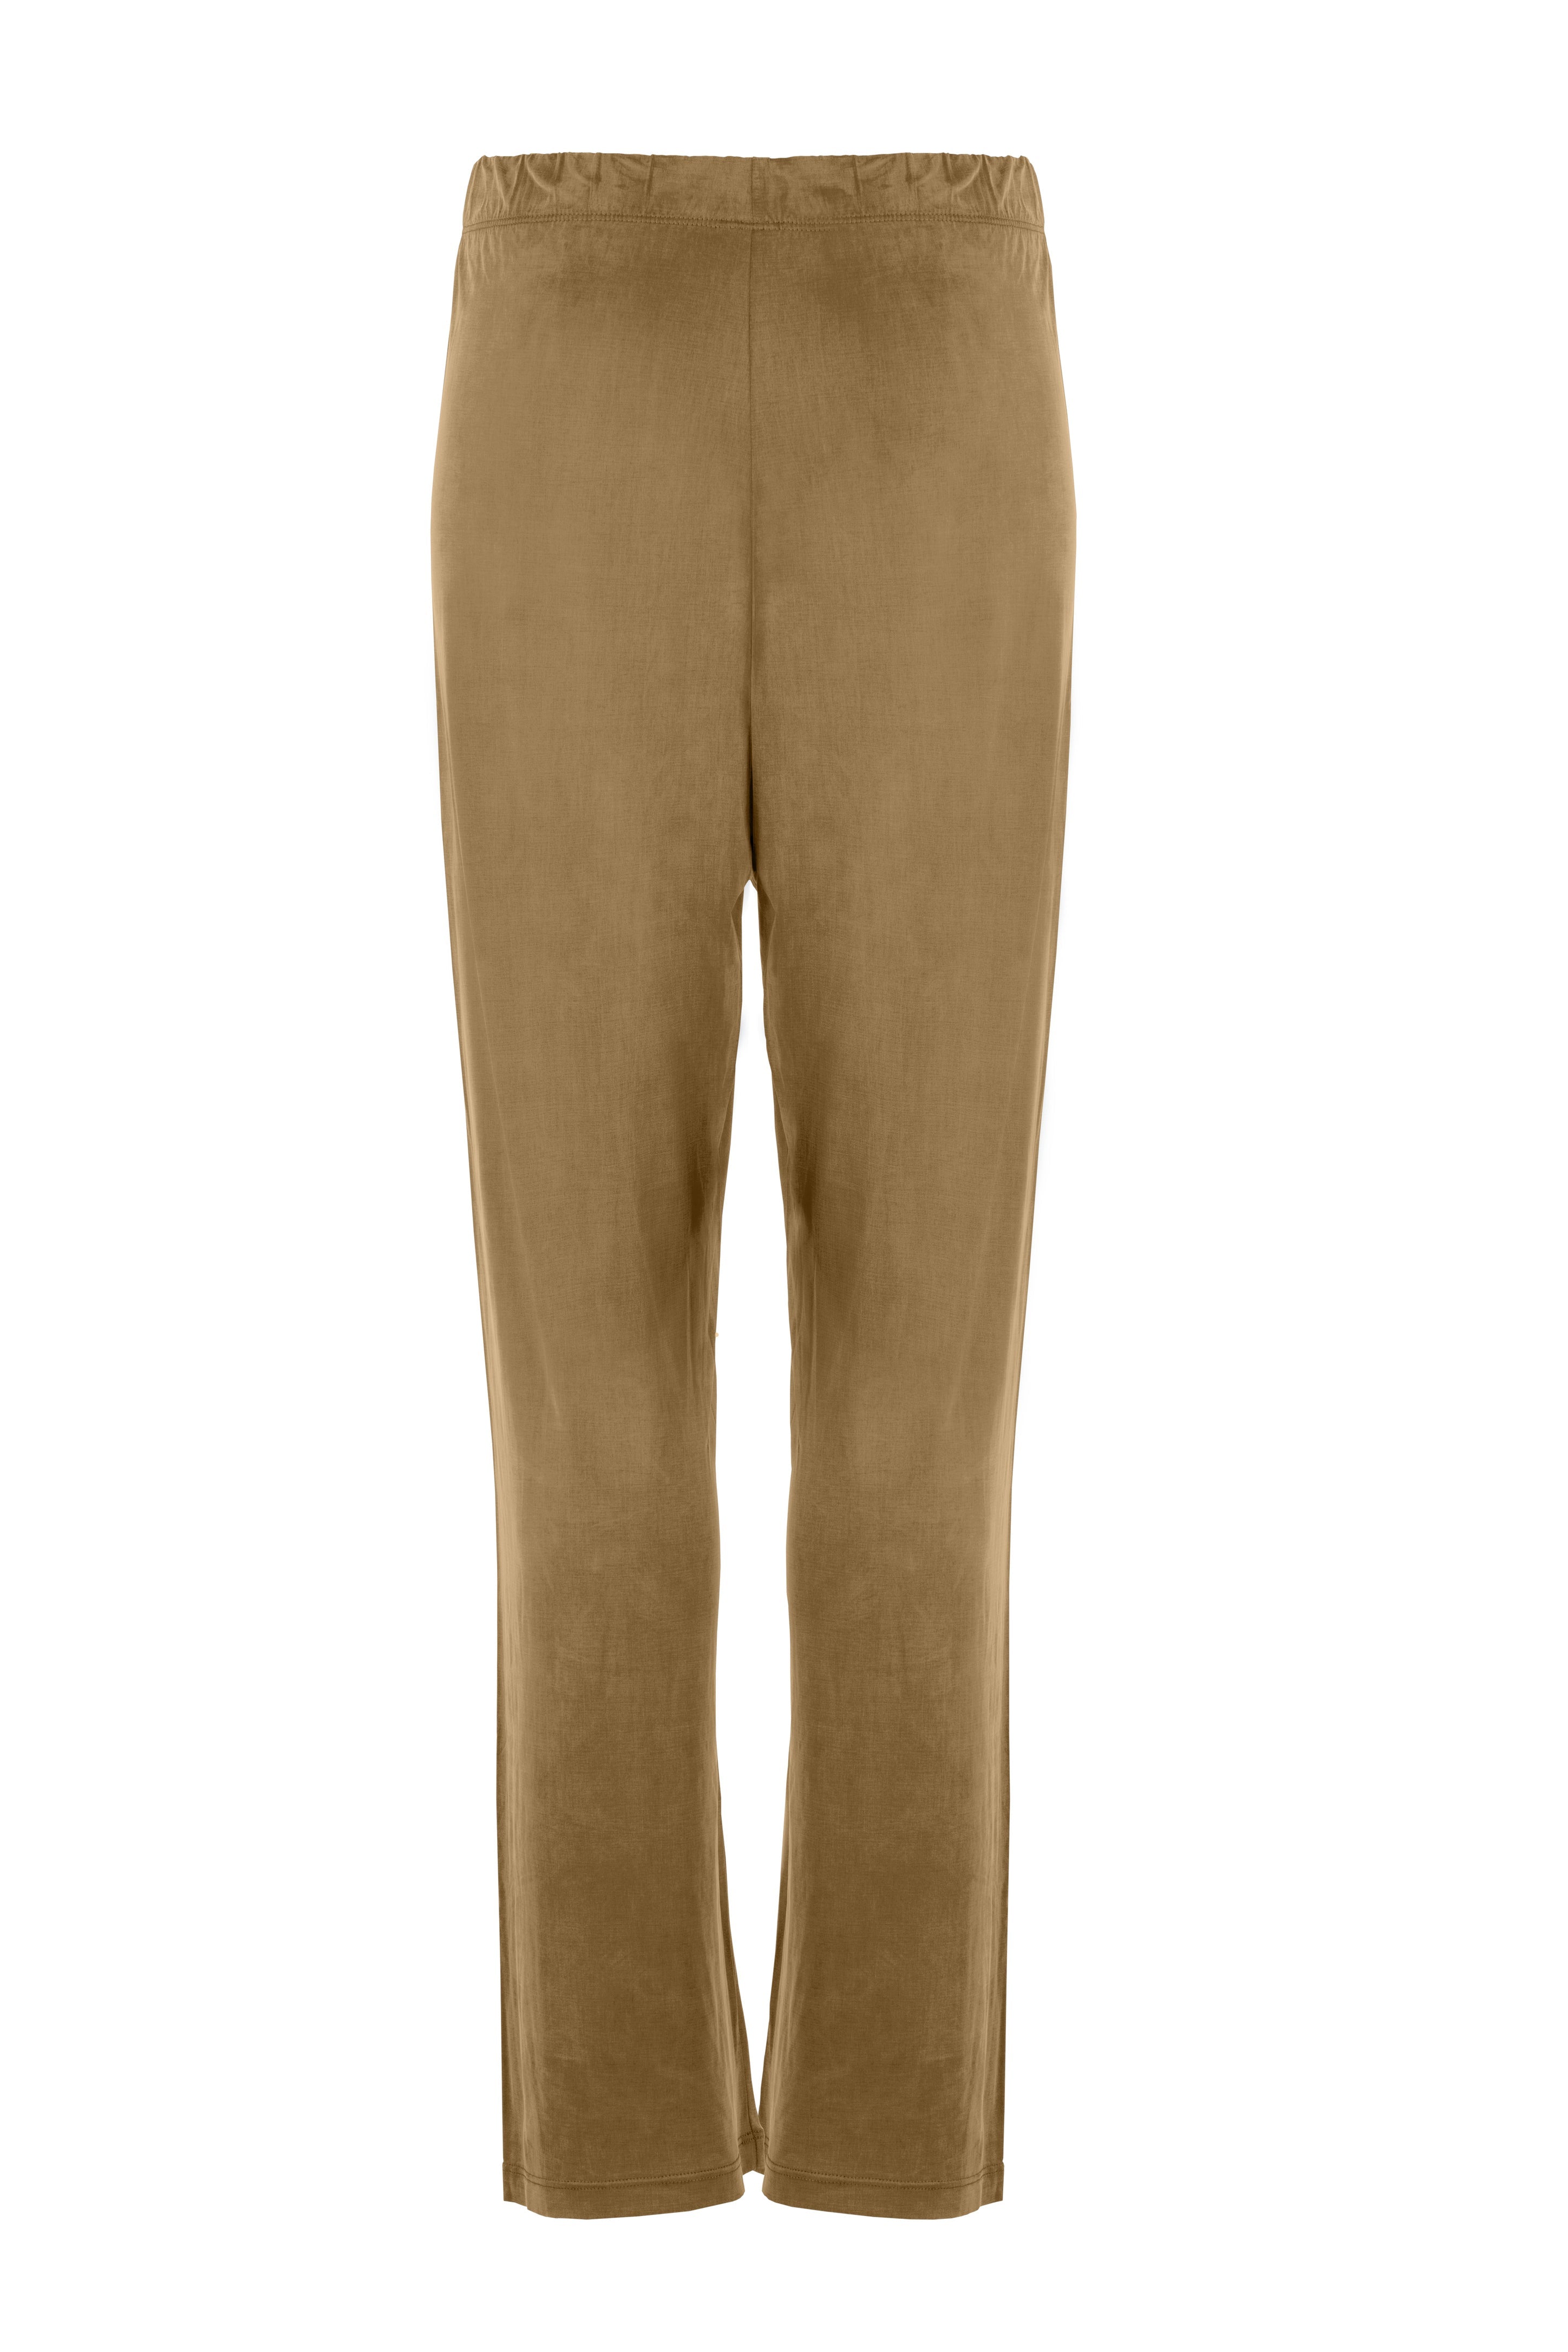 Brown high waist pants made of cupro by MOYA KALA